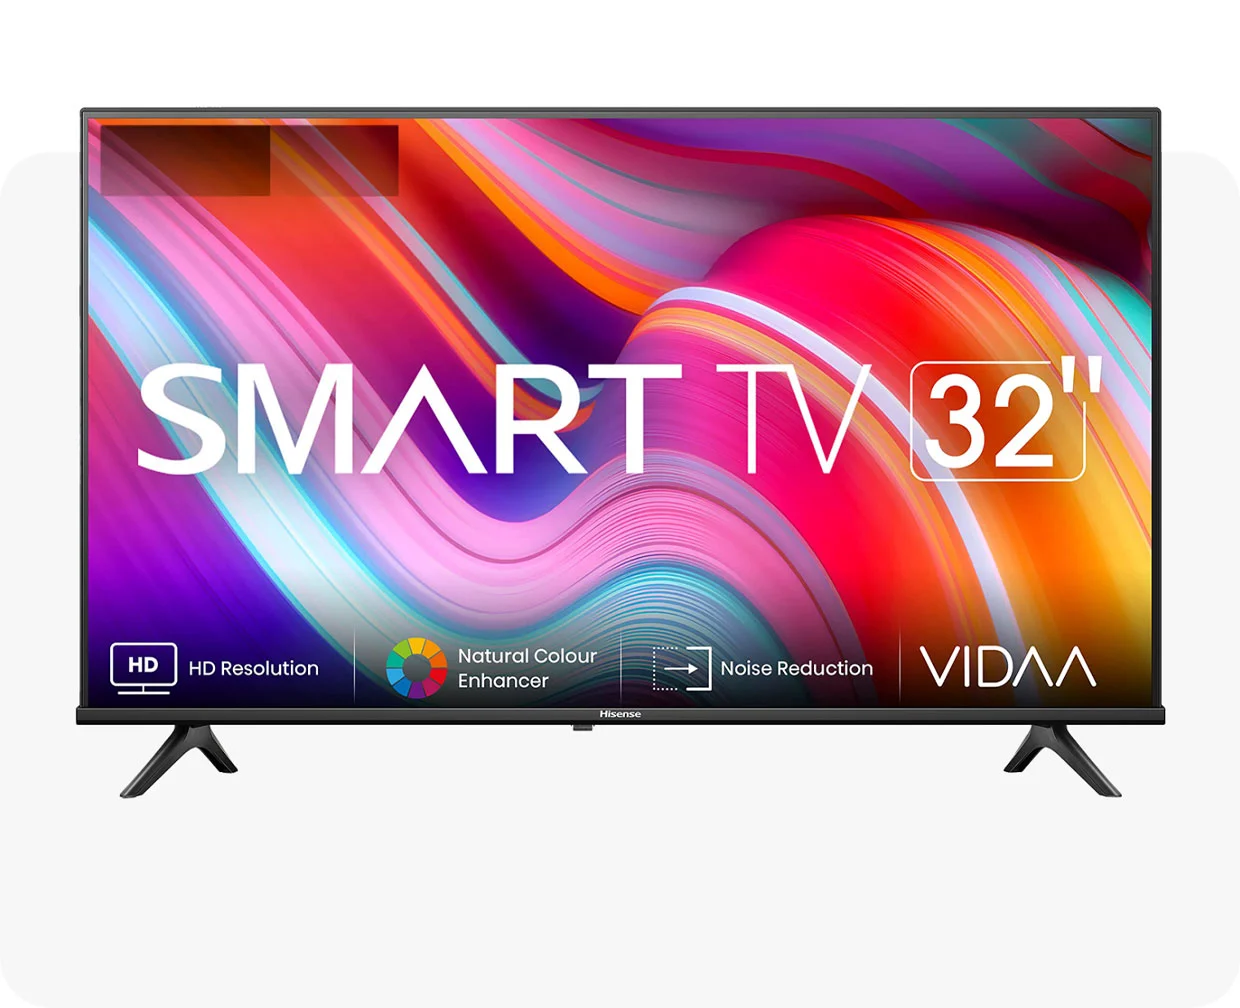 Pantalla Samsung 50 Pulgadas Smart TV QLED QN50Q80CAFXZX a precio